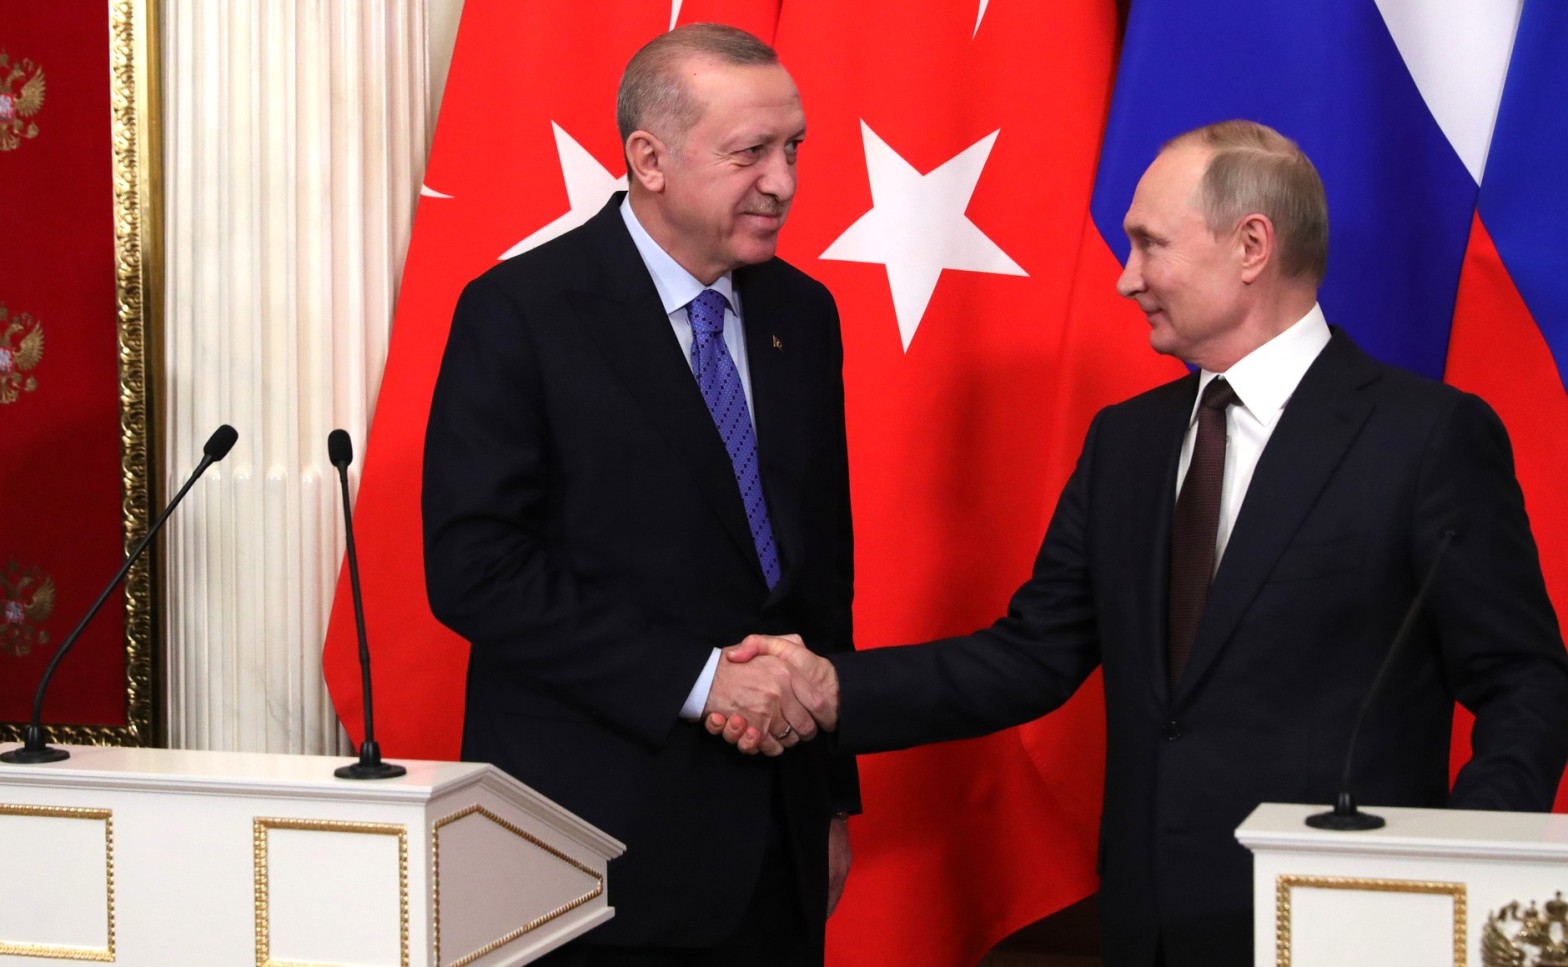 Source: https://commons.wikimedia.org/wiki/File:Vladimir_Putin_and_Recep_Tayyip_Erdogan_(2020-03-05)_04.jpg